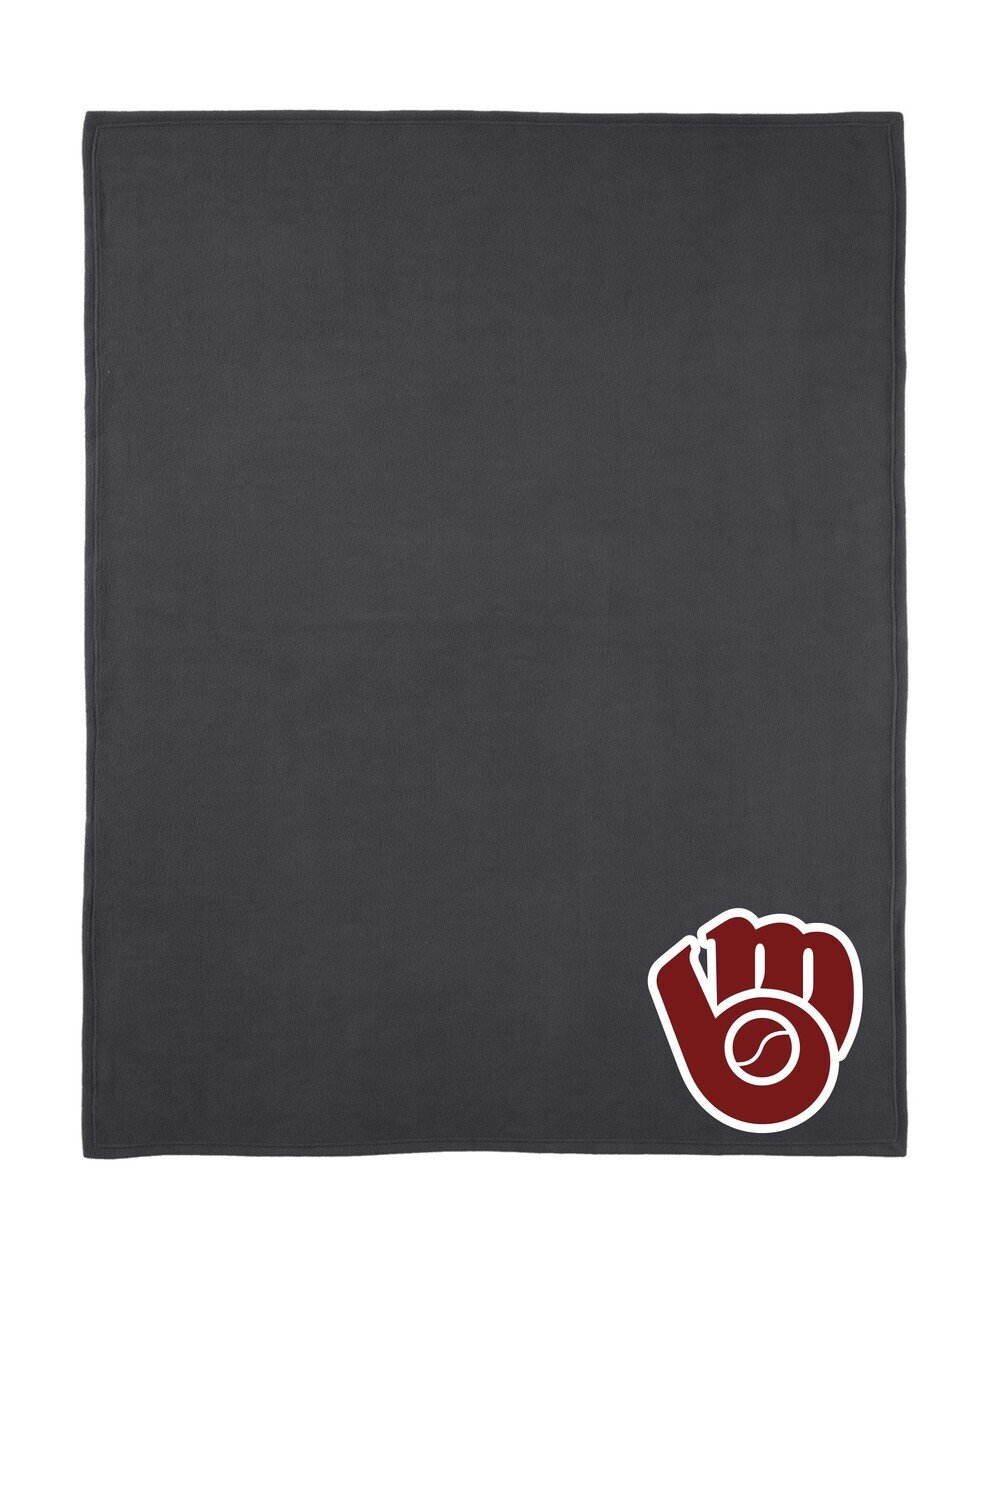 Moline Blackhawks Glove Logo Fleece Blanket with Carrying Strap